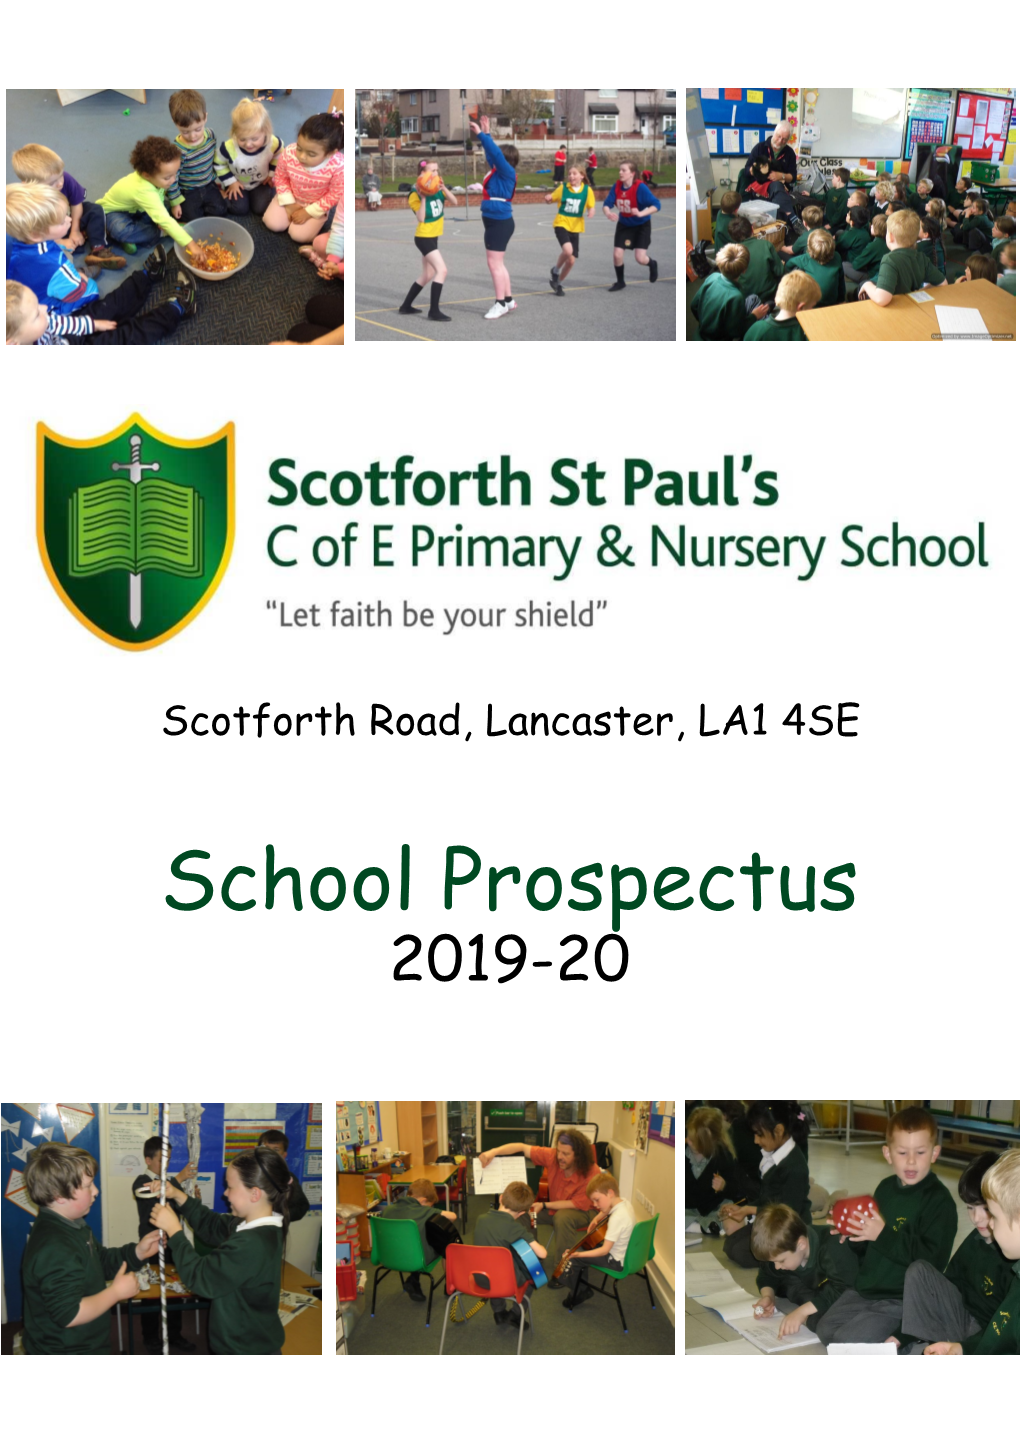 School Prospectus 2019-20